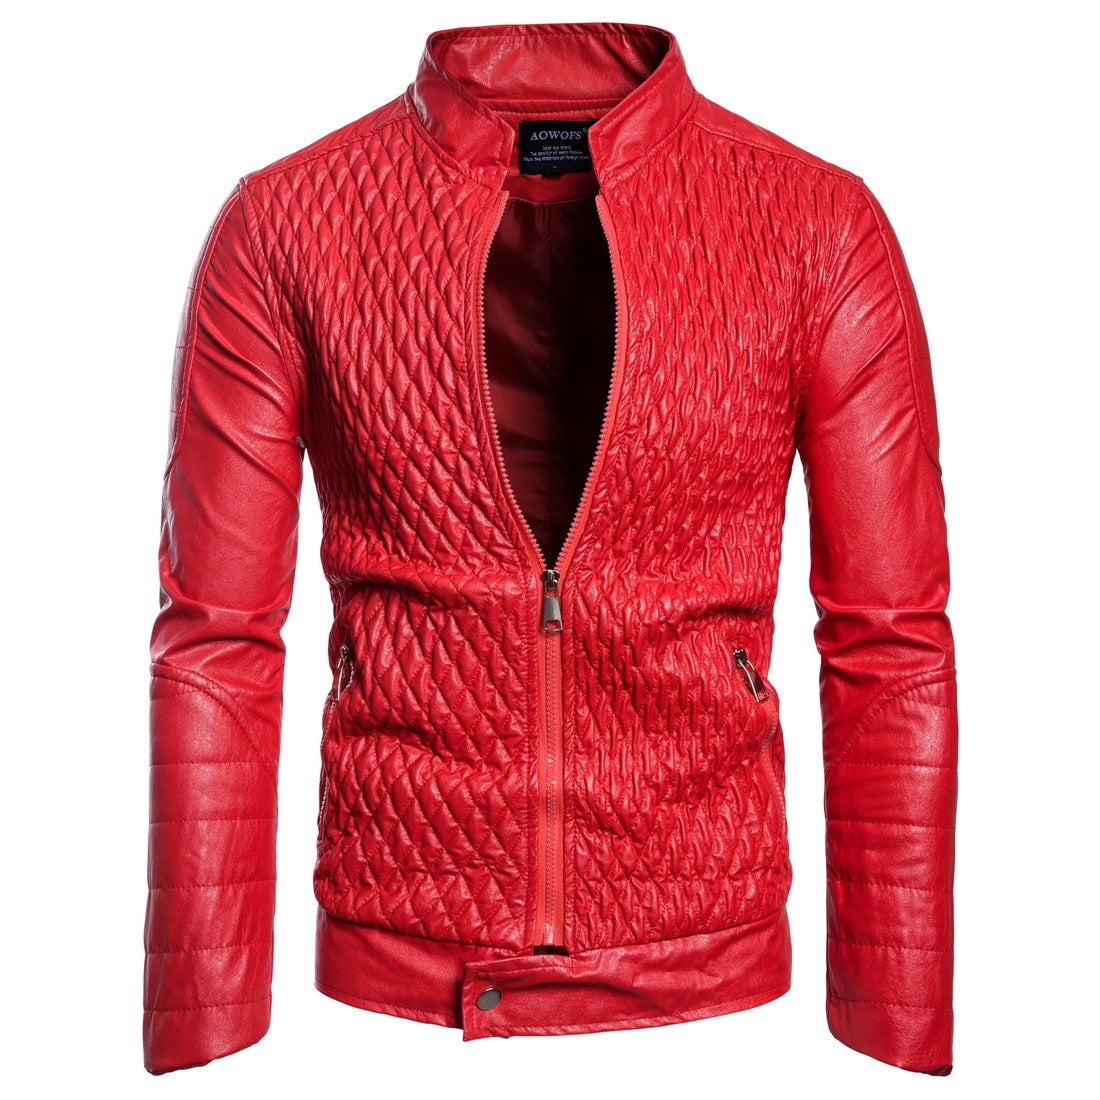 Long Sleeve Zipper Cardigan Jacket Leather Jacket Leather Coat apparels & accessories